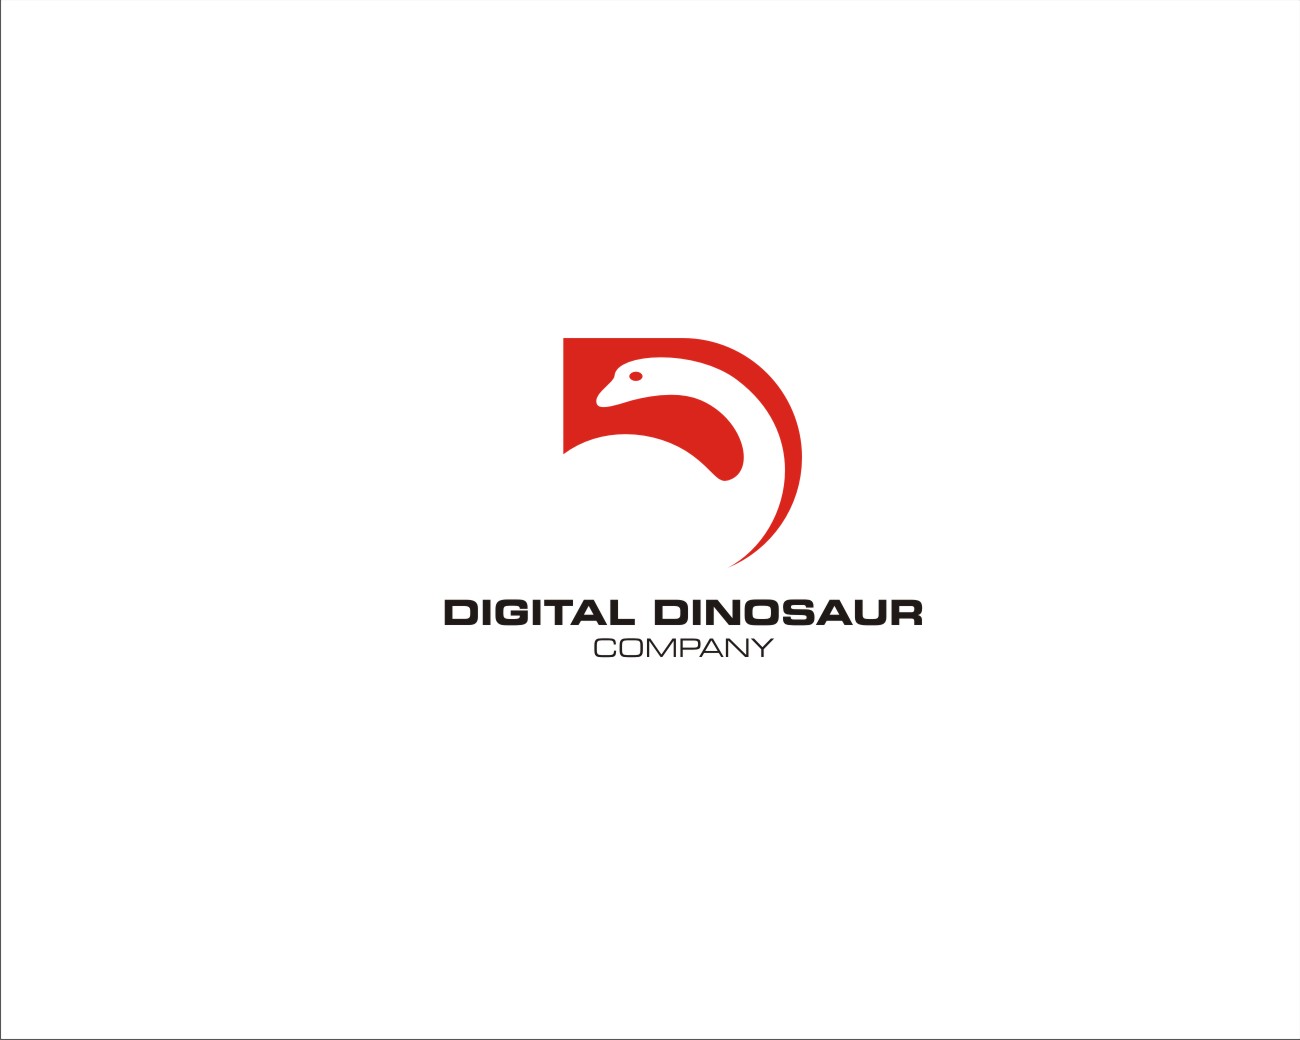 Logo Design entry 1163243 submitted by kembarloro to the Logo Design for Digital Dinosaur Co. or Digital Dinosaur Company run by digidinoco